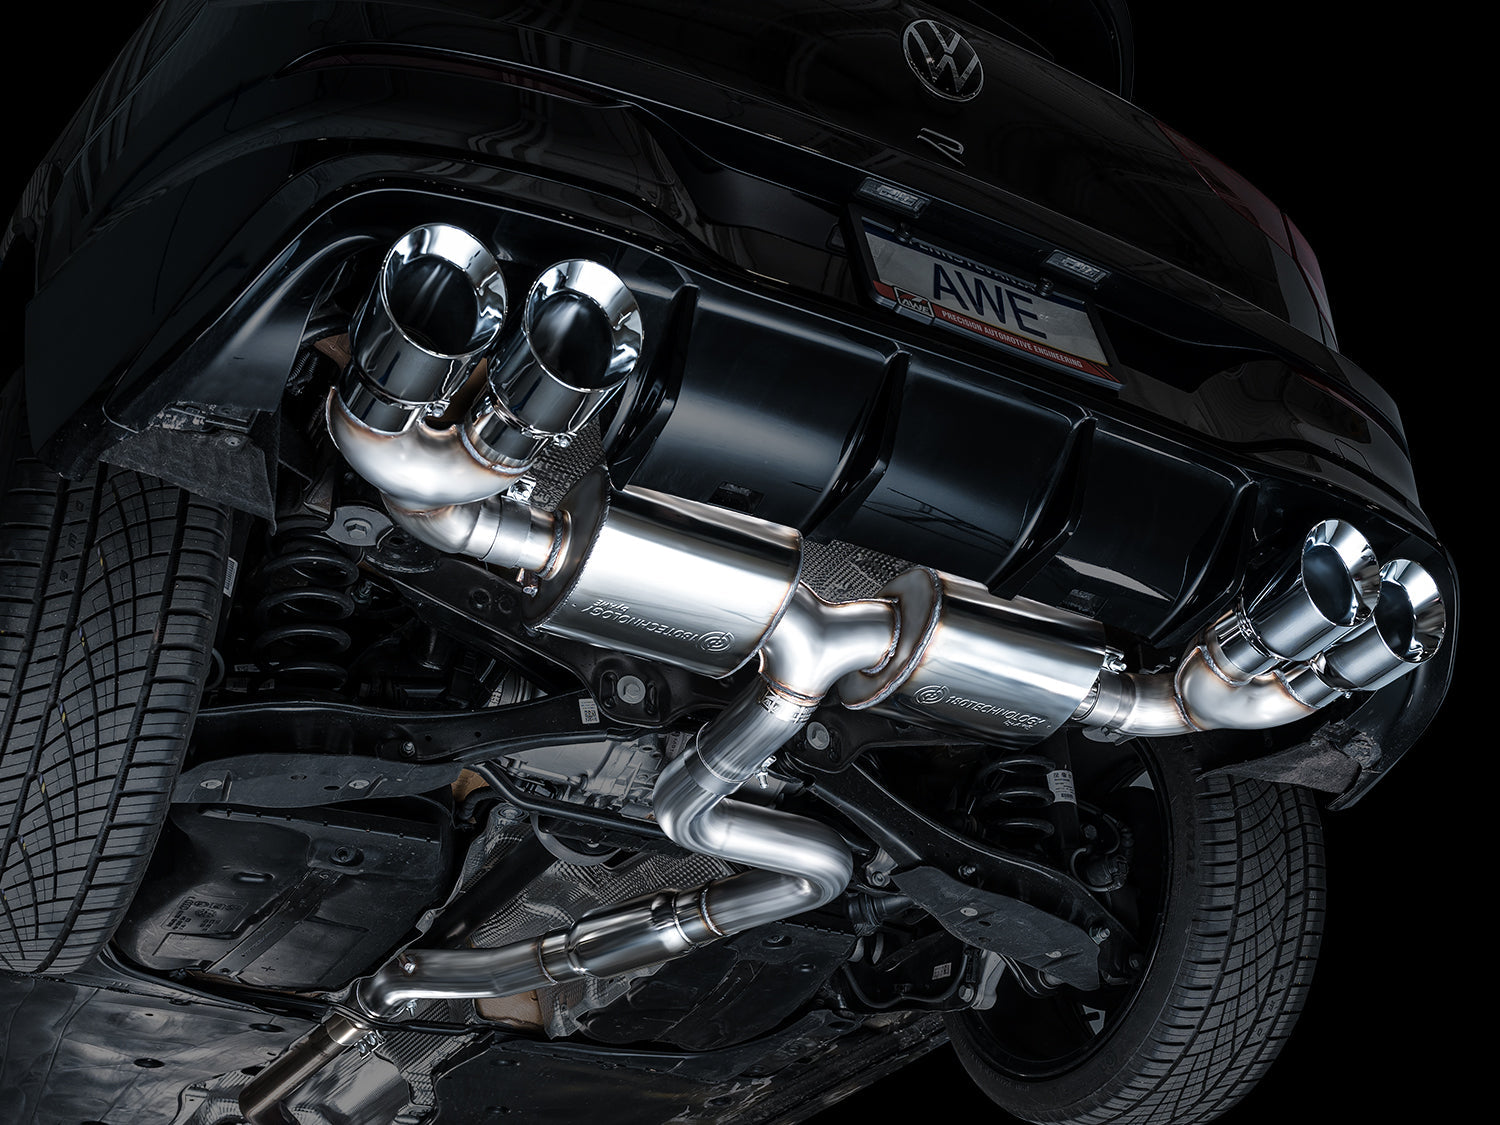 AWE Exhaust for Volkswagen MK8 Golf R